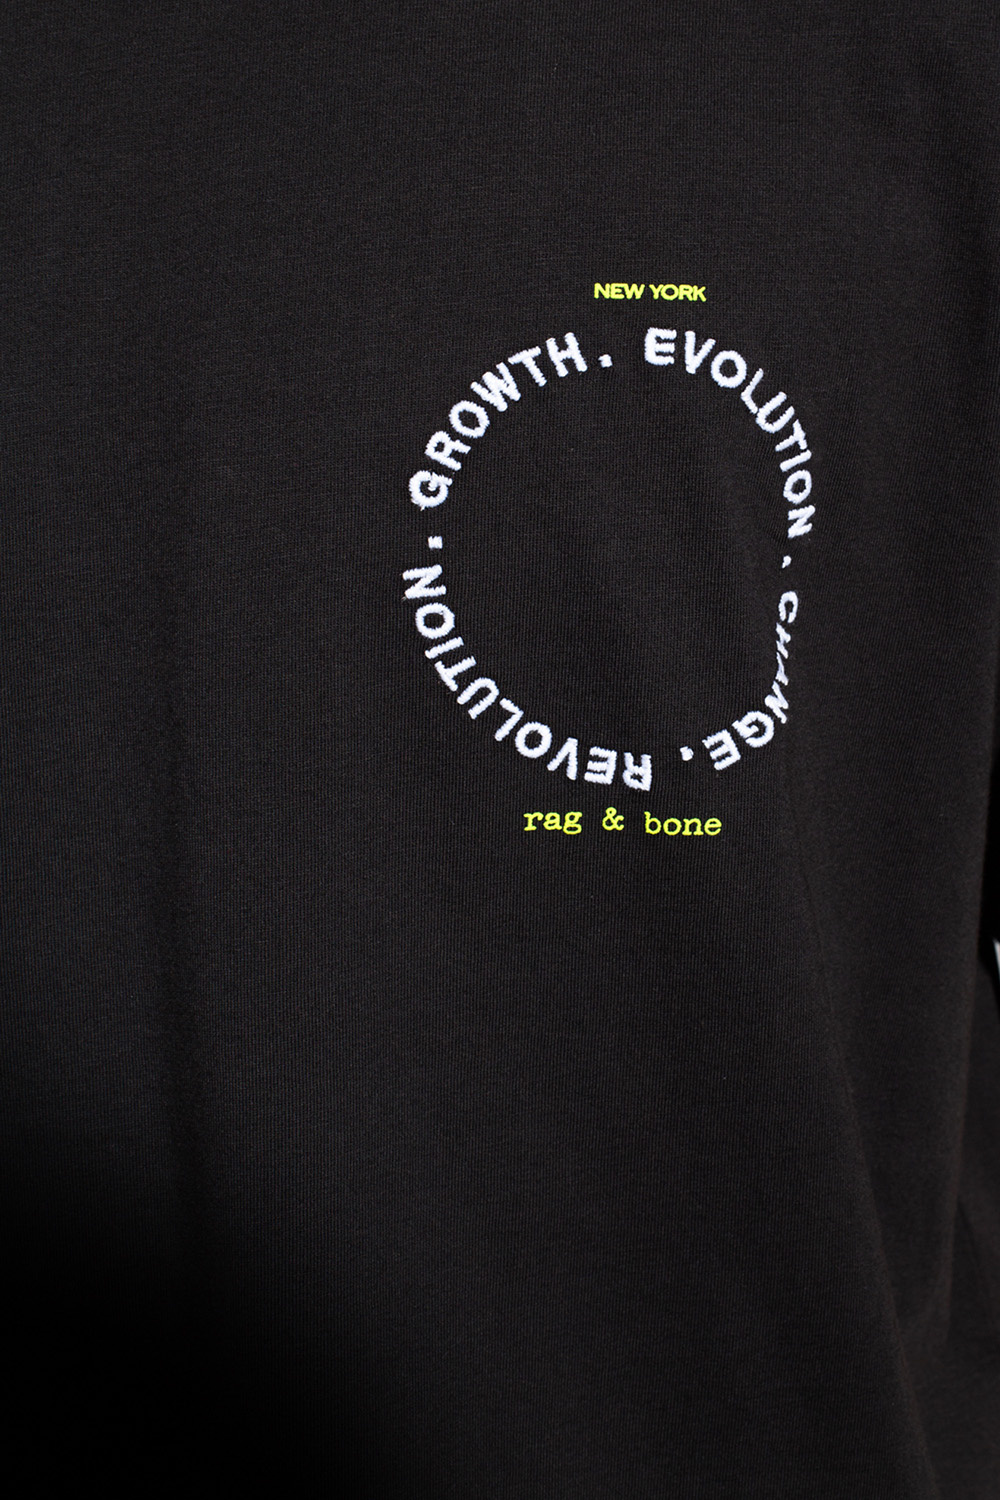 OAMC slogan-print T-shirt  Organic cotton T-shirt